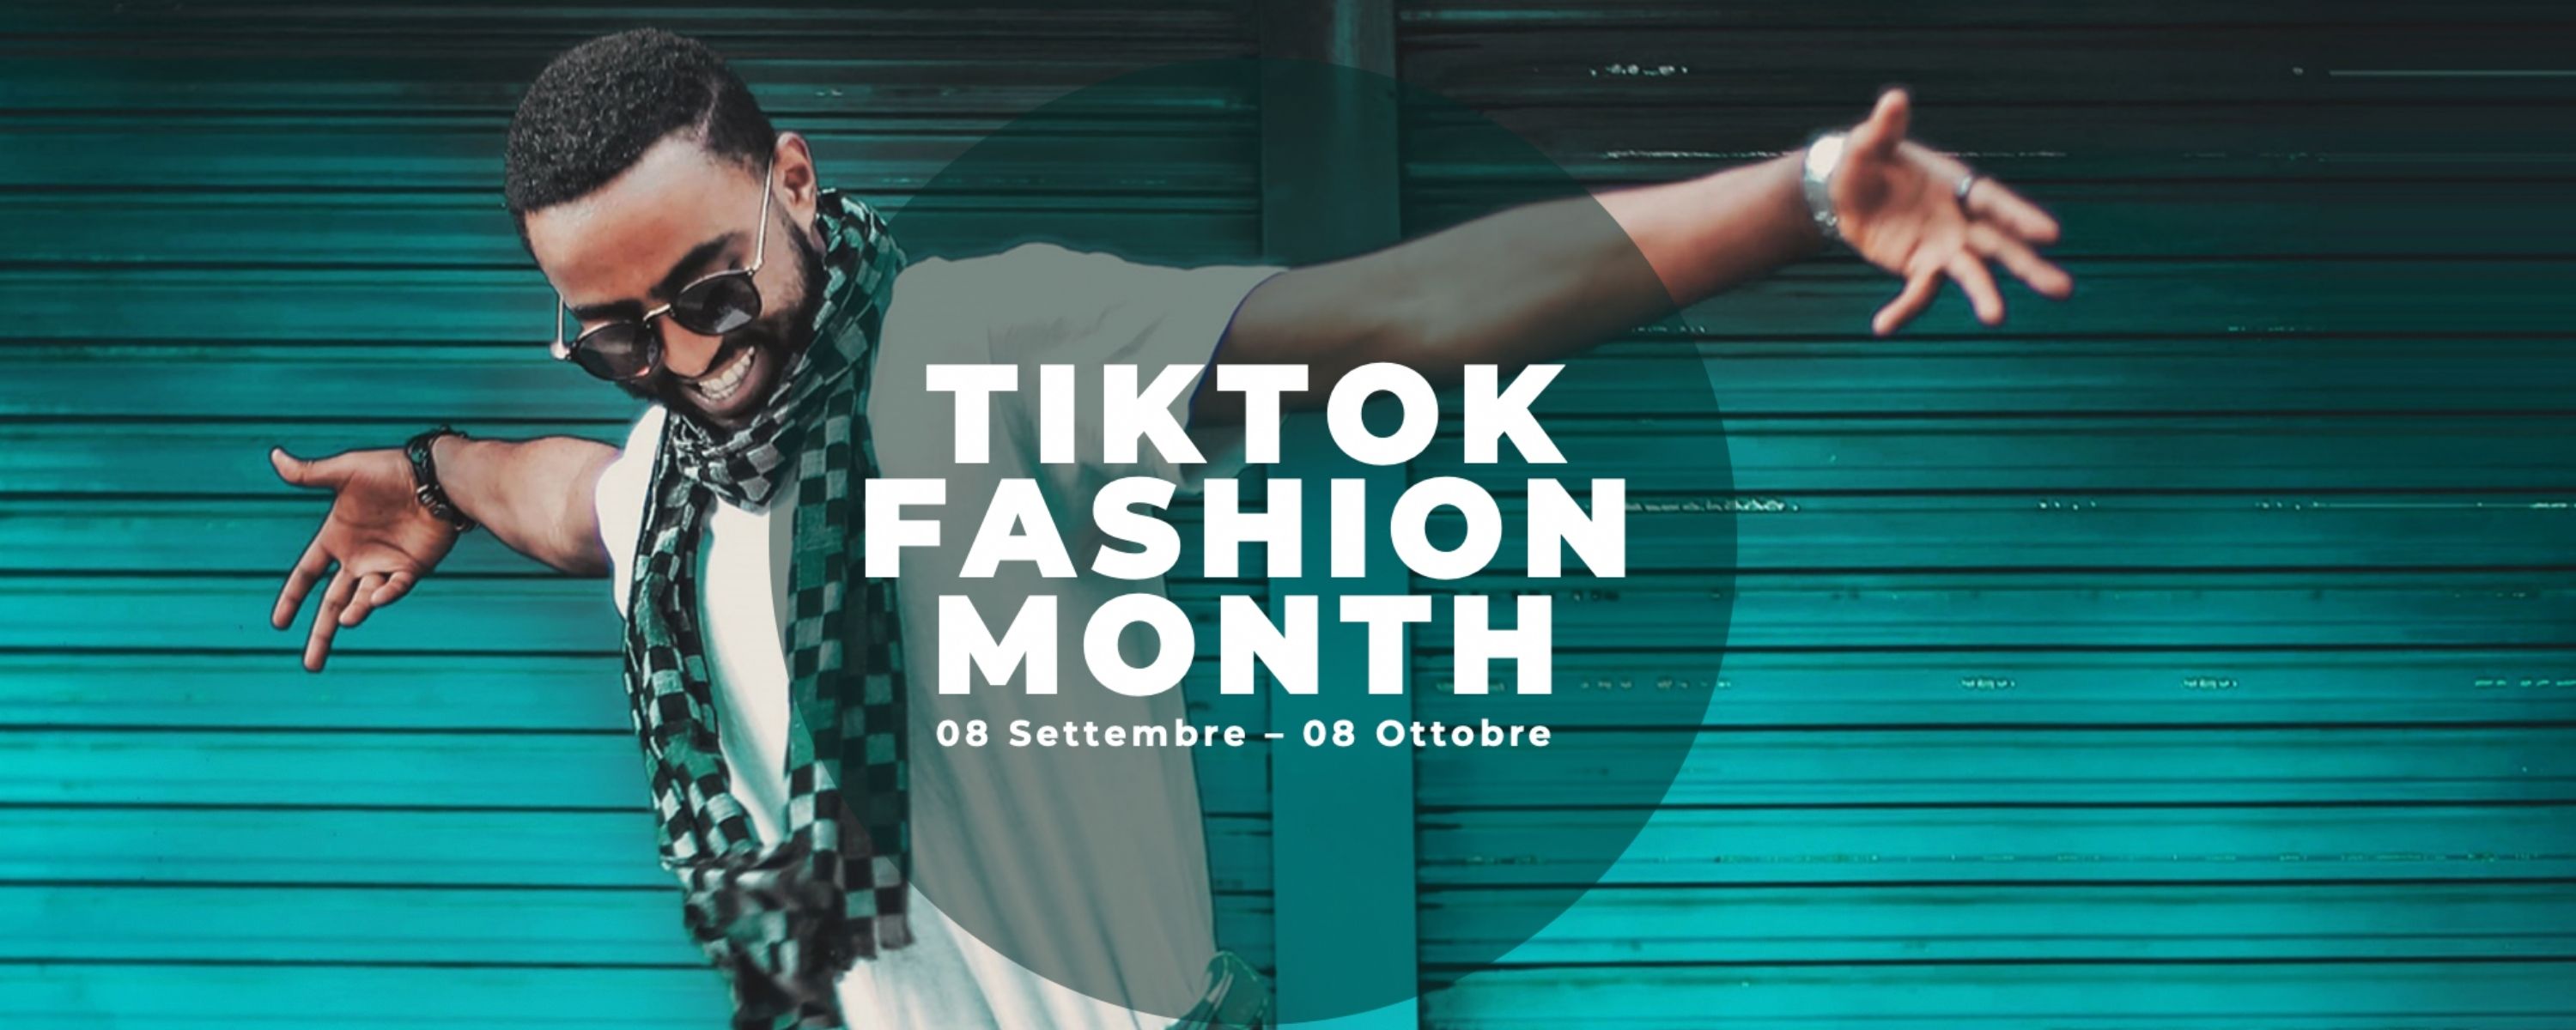 TikTok Fashion Month